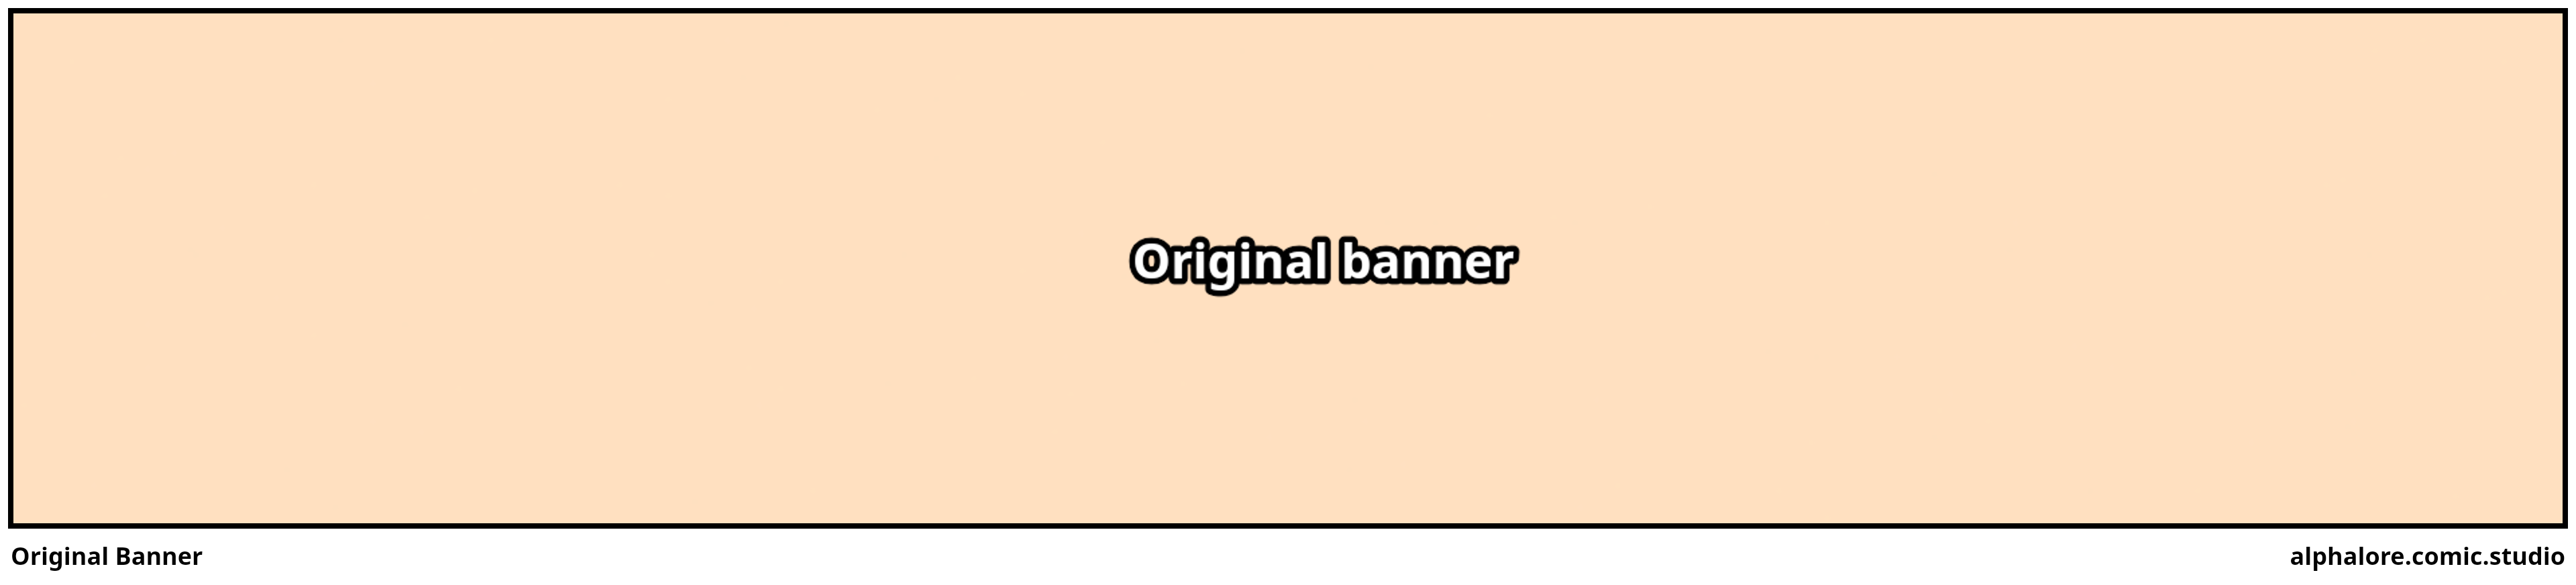 Original Banner